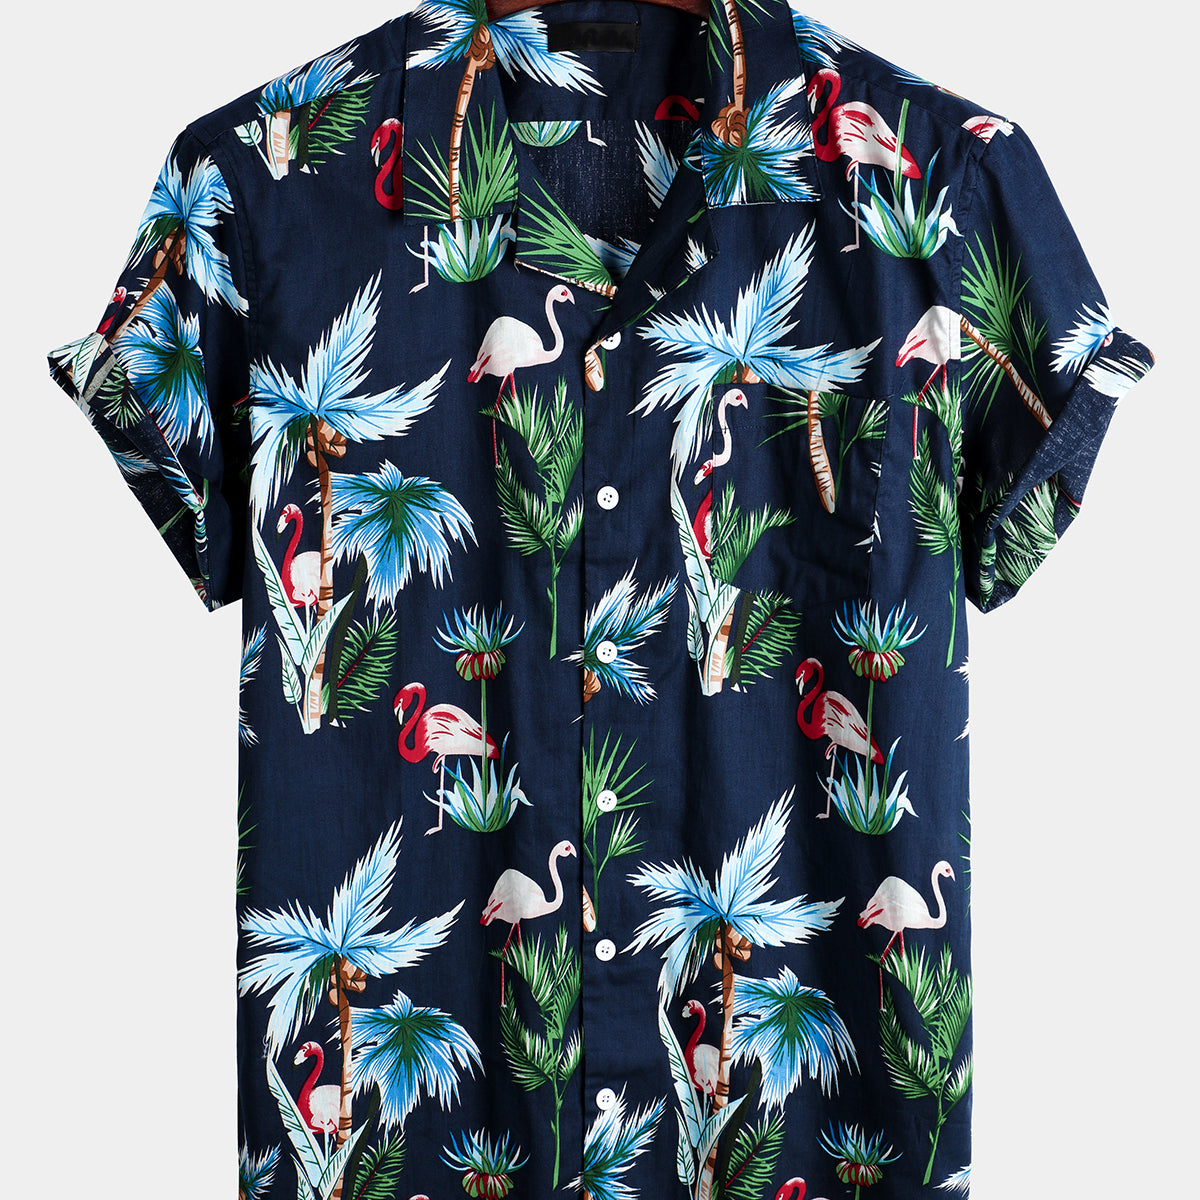 Men's Navy Blue Flamingo Print Cotton Hawaiian Short Sleeve Shirt